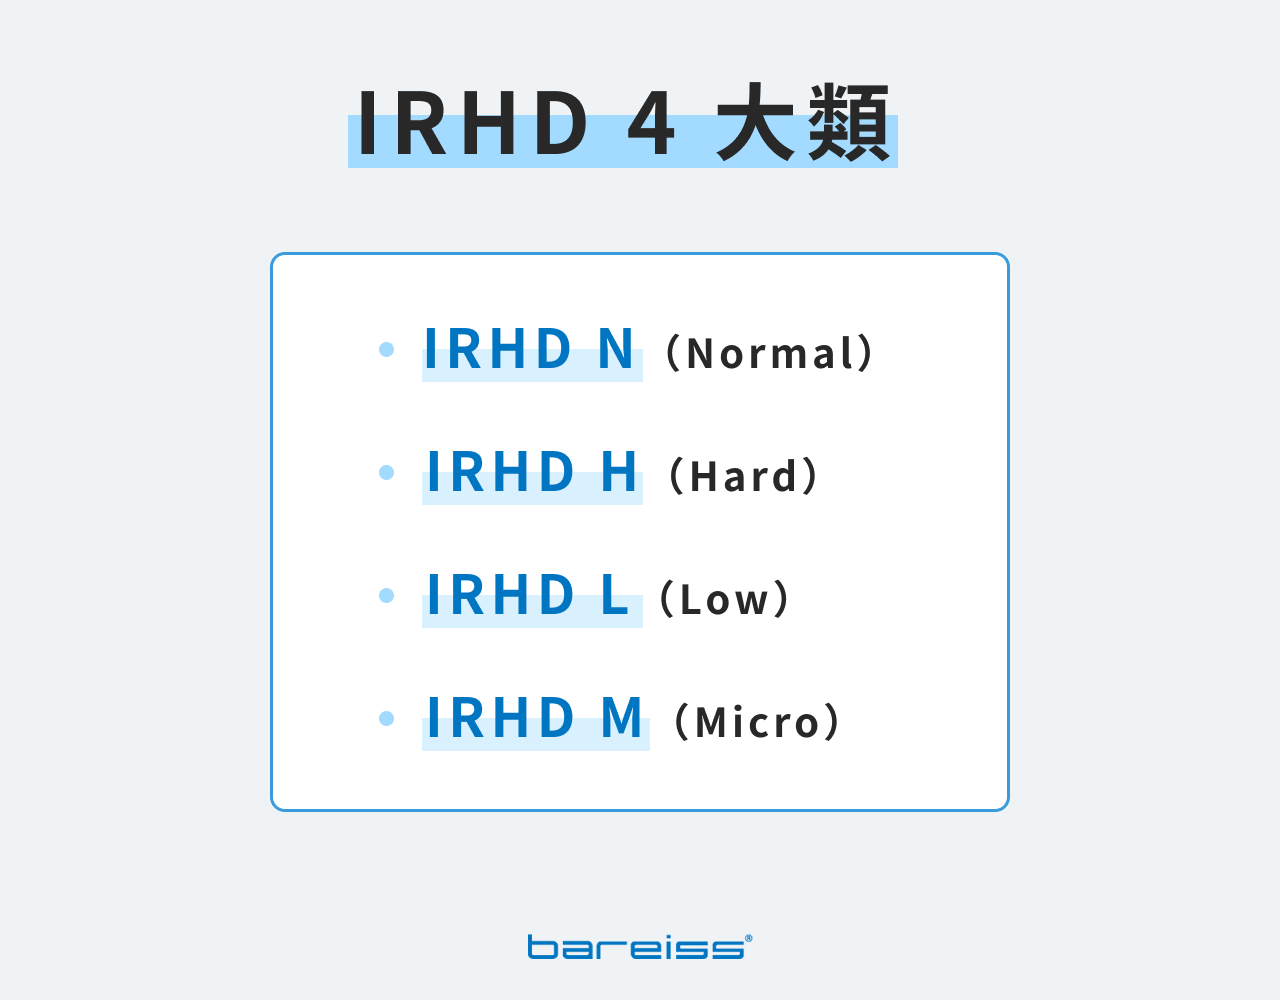 IRHD 4 大類